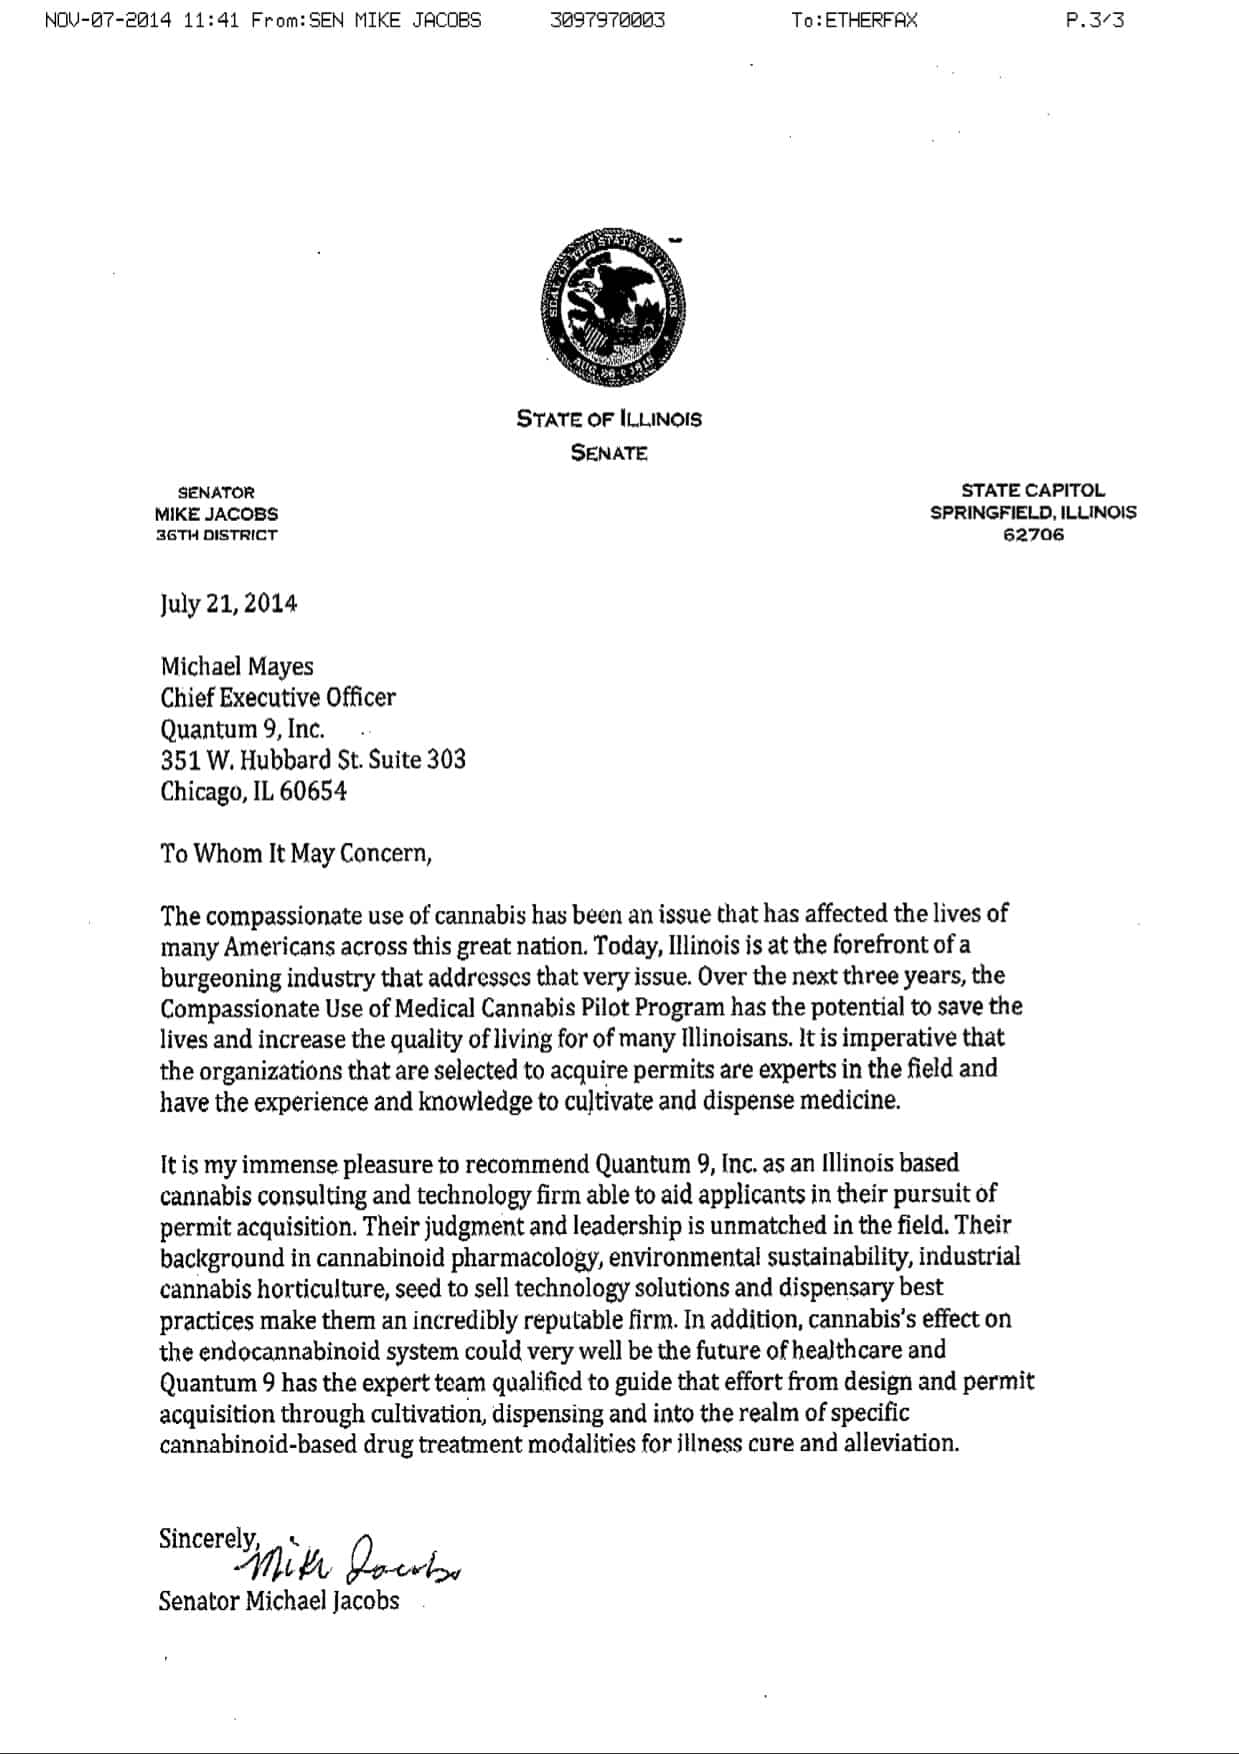 IL Senator Jacobs Letter if Rec